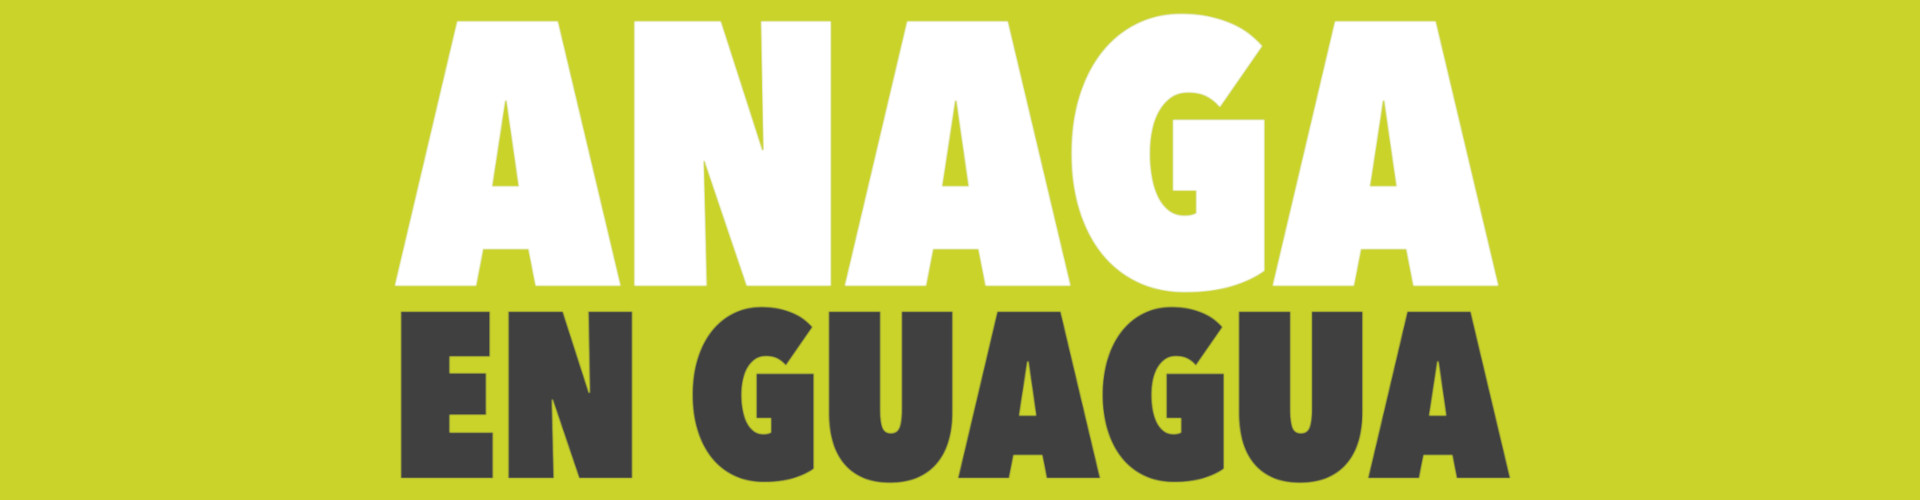 Anaga en Guagua